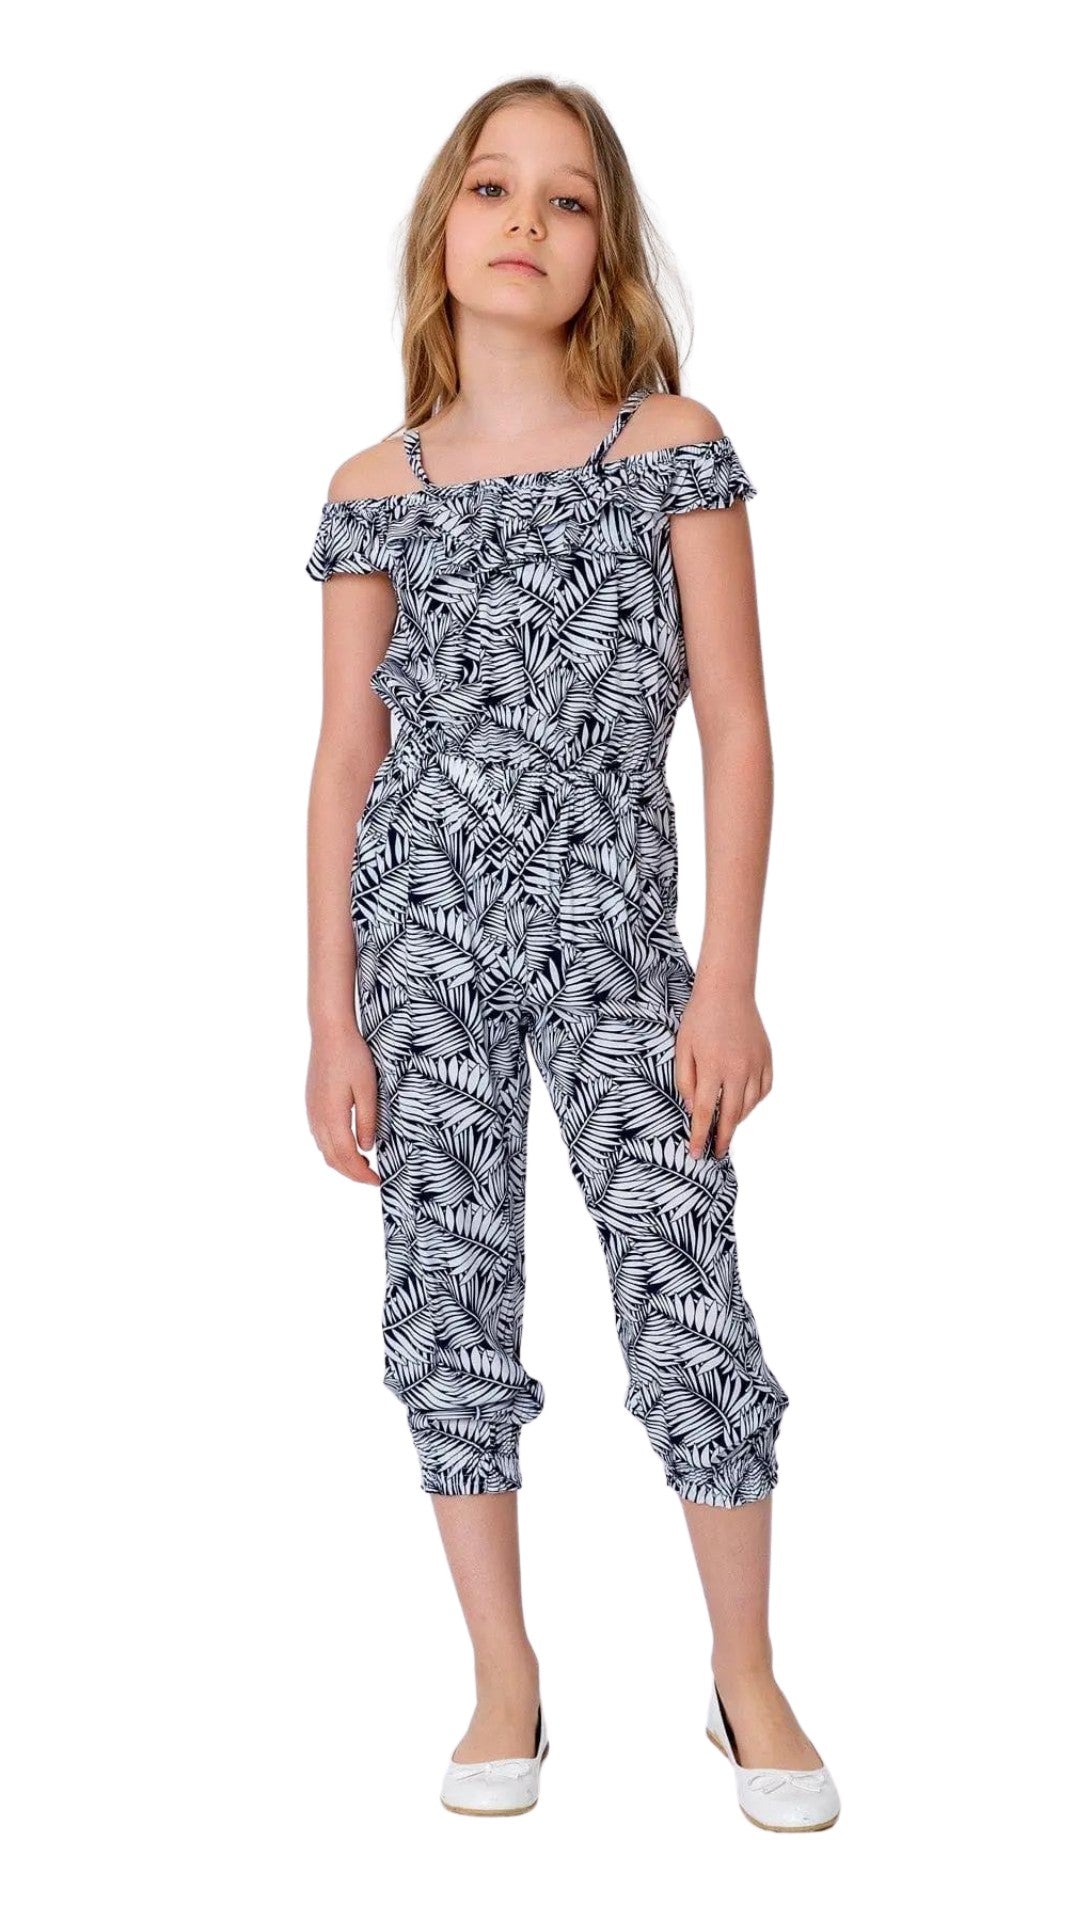 InCity Girls Toddler Tween 1-14 Years Off-Shoulder Jumpsuit Printed Zoe Fashion Romper InCity Boys & Girls